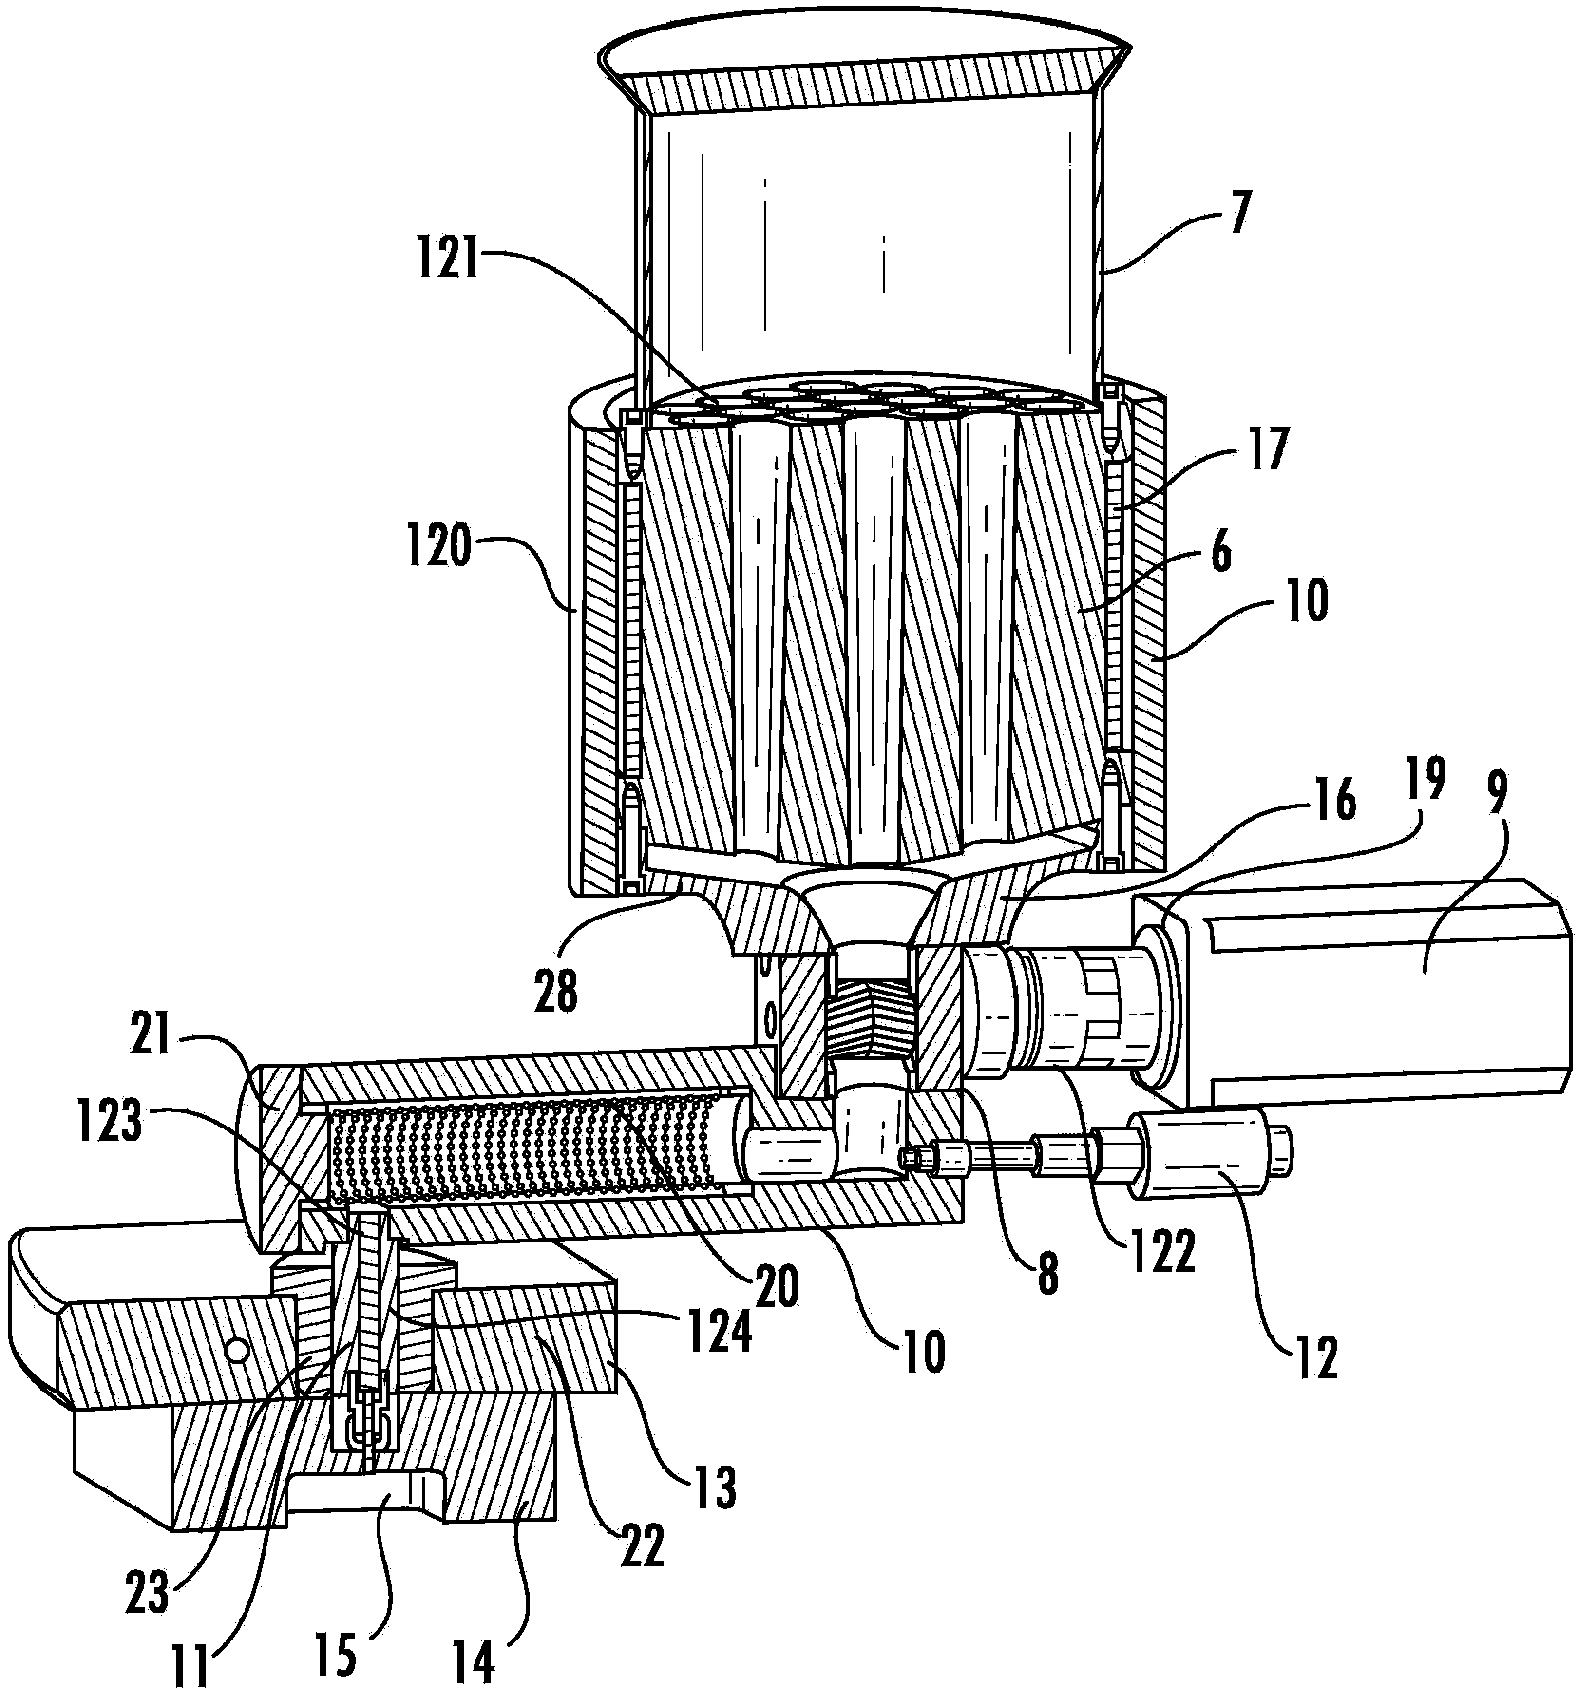 Molding apparatus